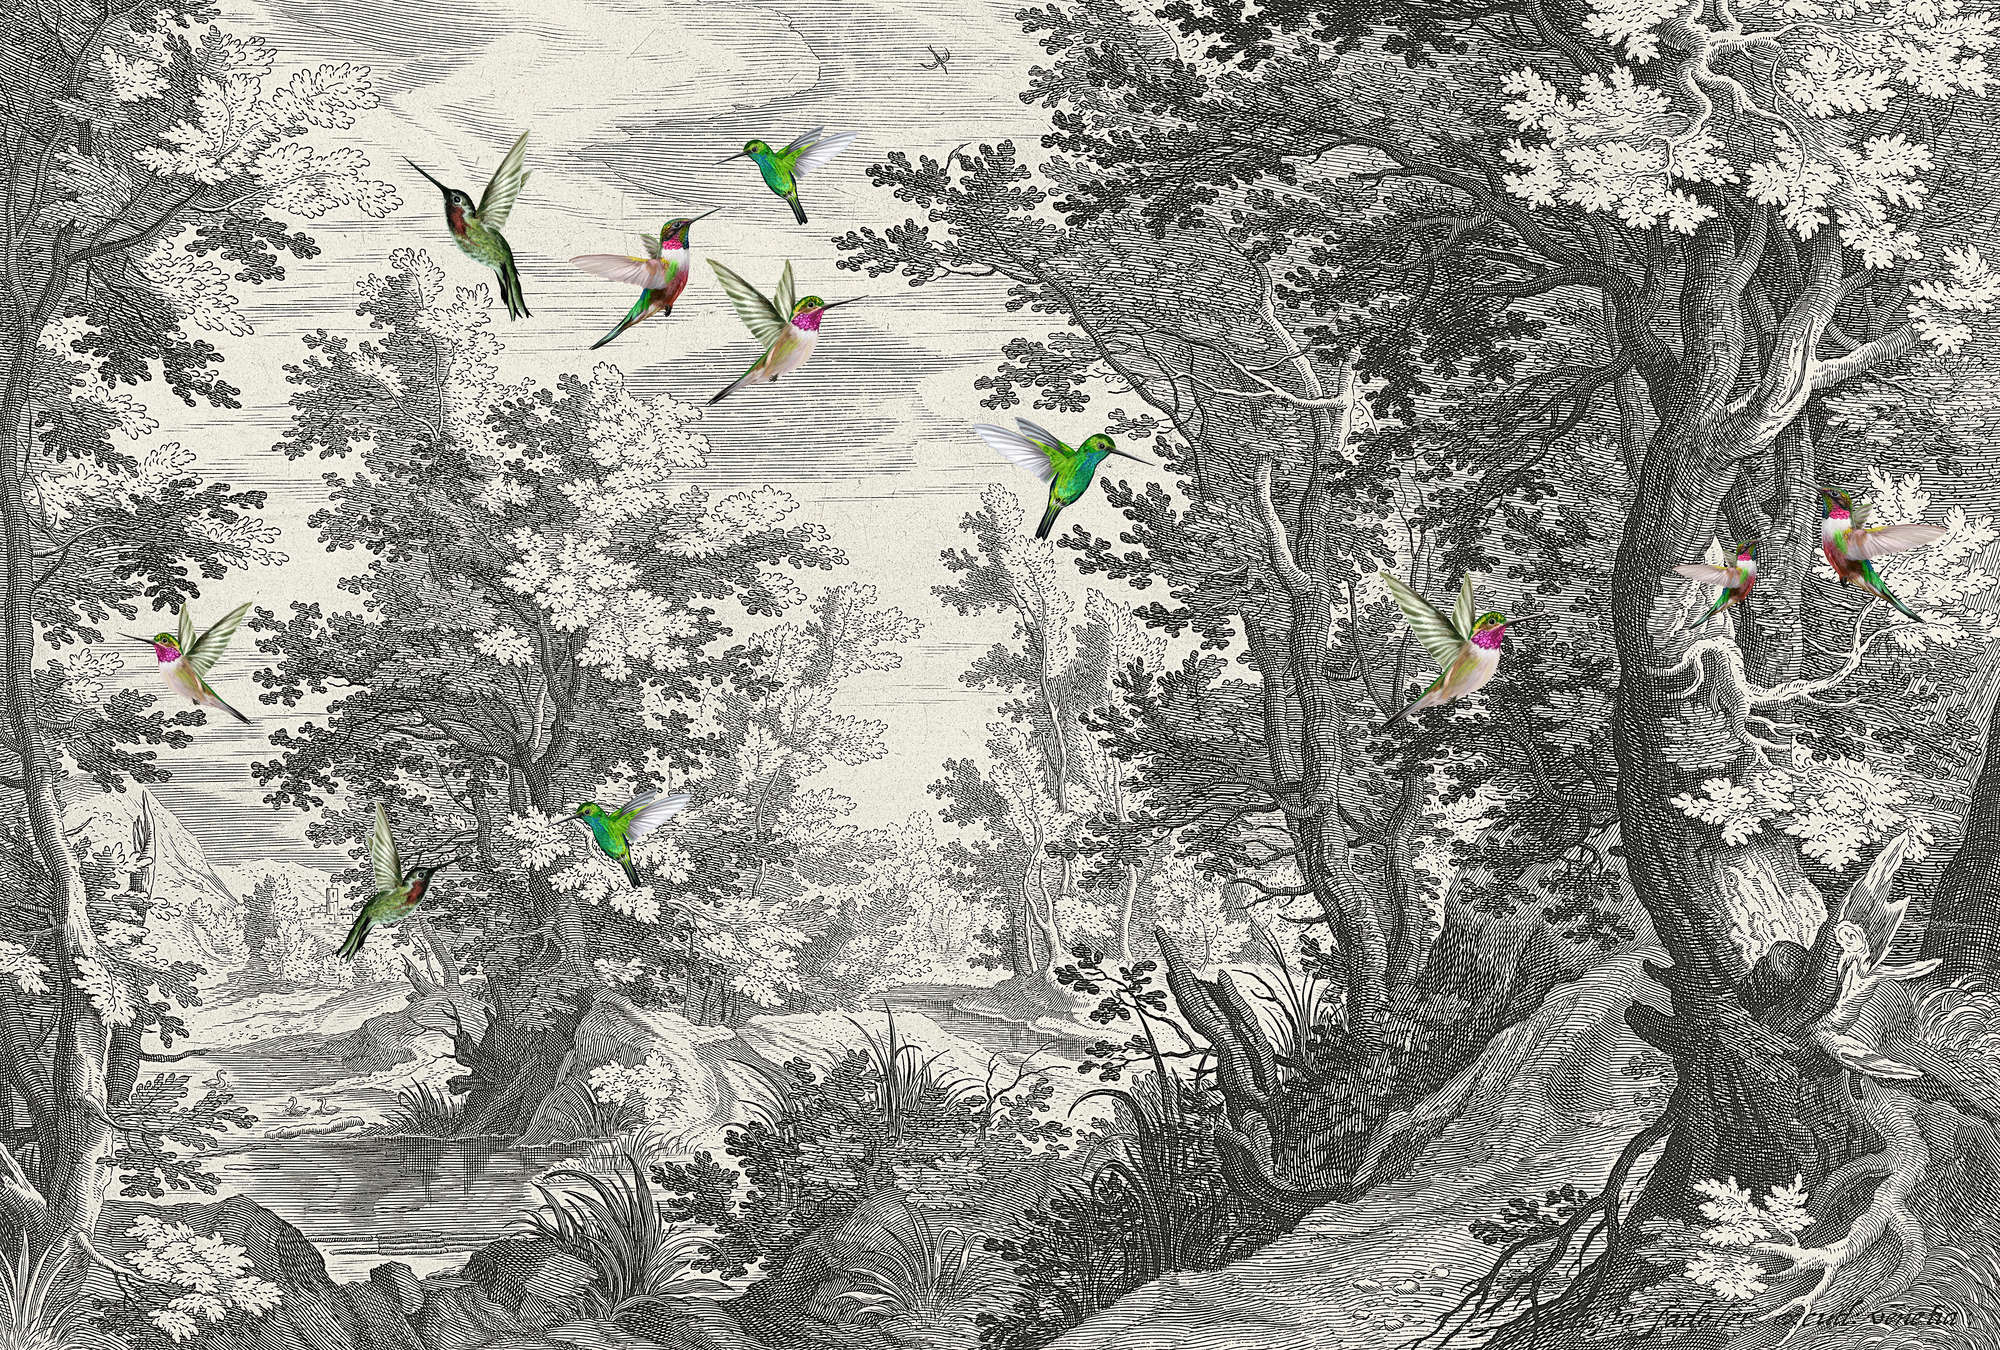             Fancy Forest 1 - landscape photo wallpaper art print with birds
        